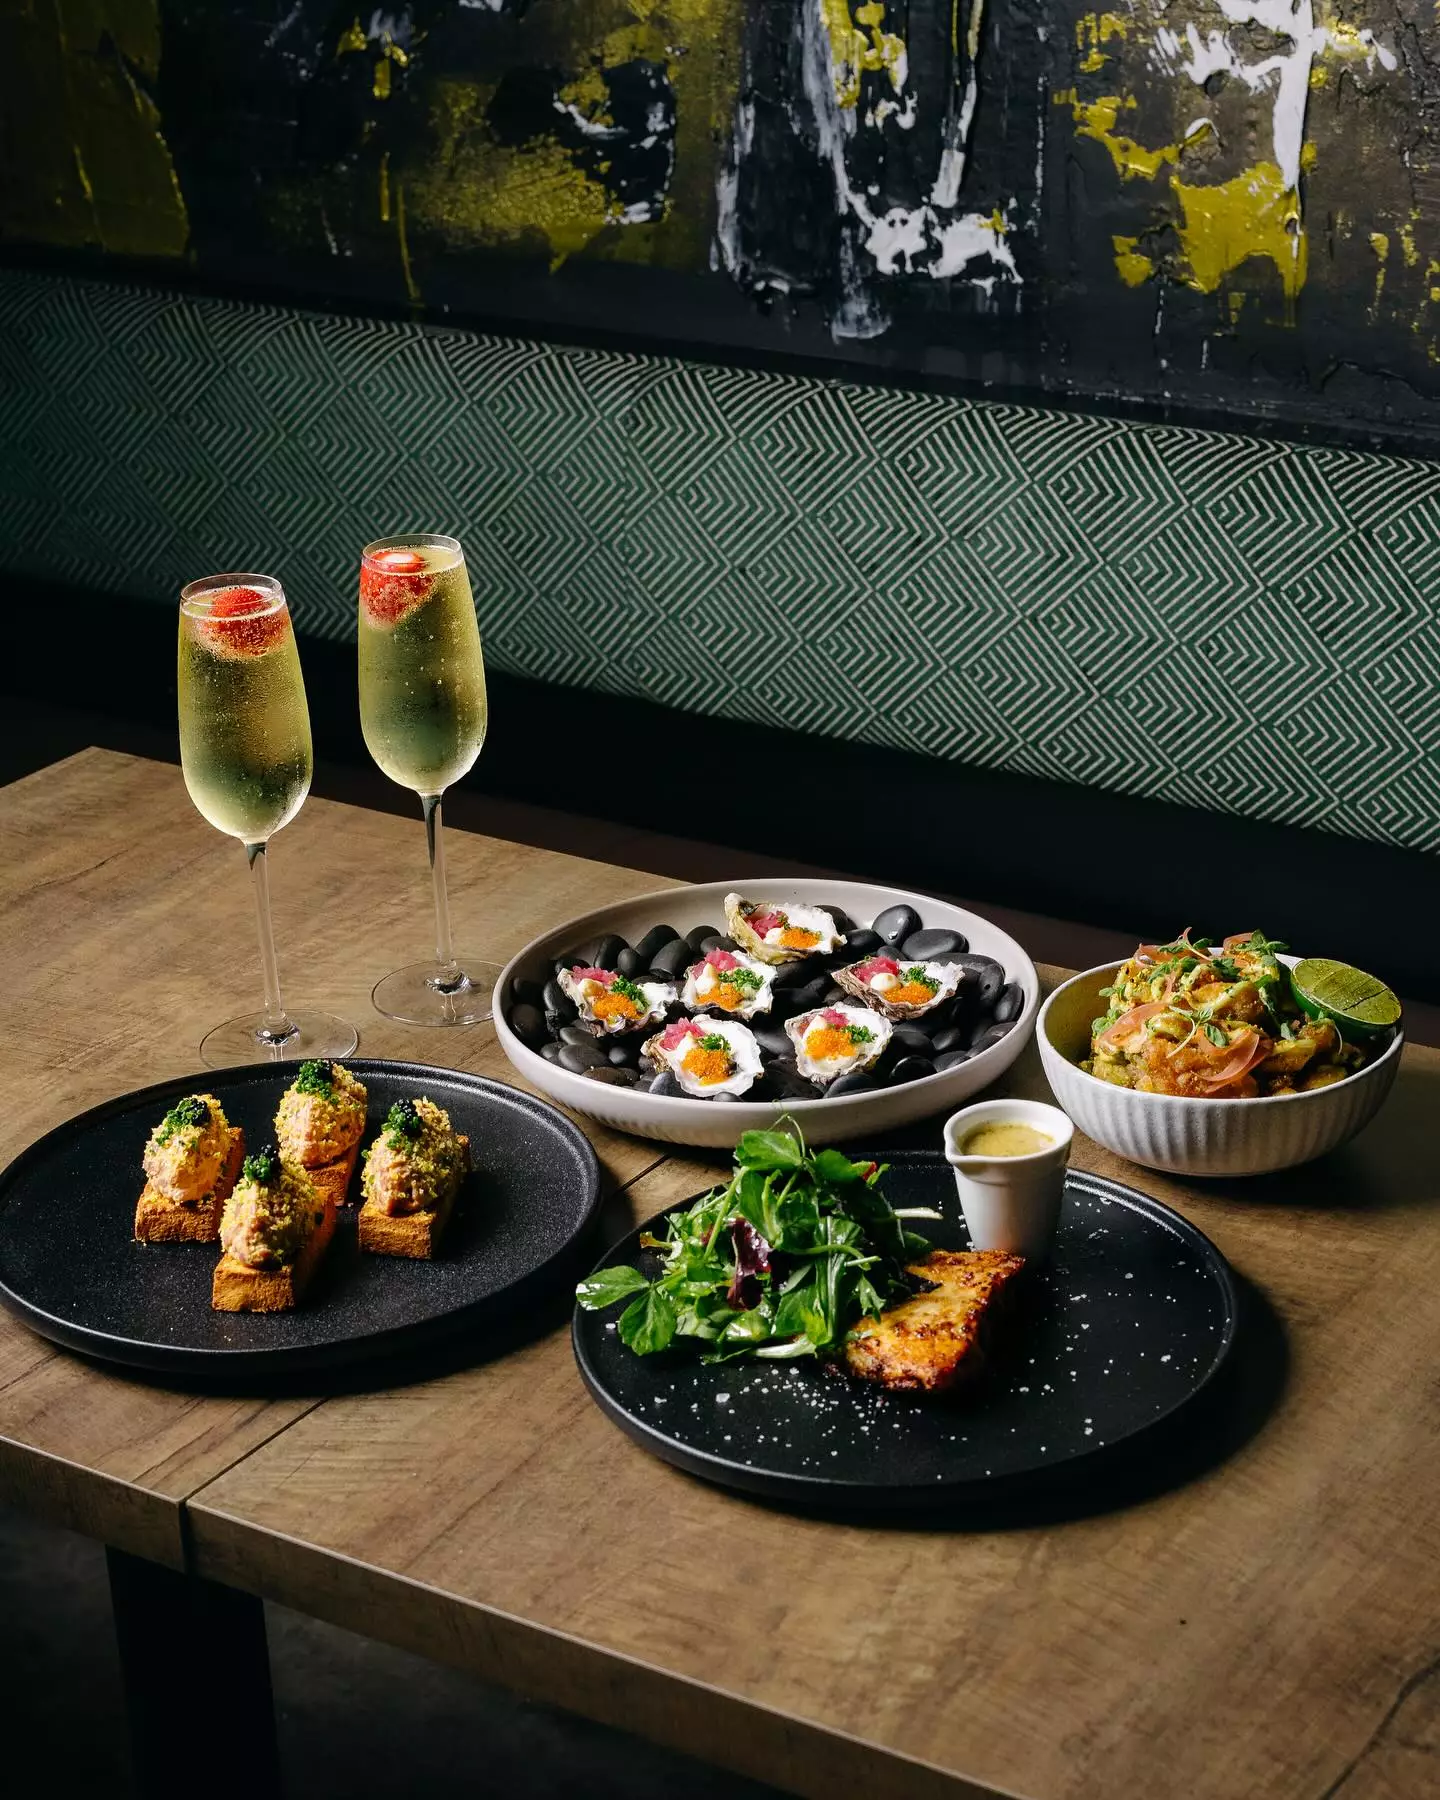 Kin Dining and Bar describes itself as 'Modern Australian meets Japanese & South American cuisine'.